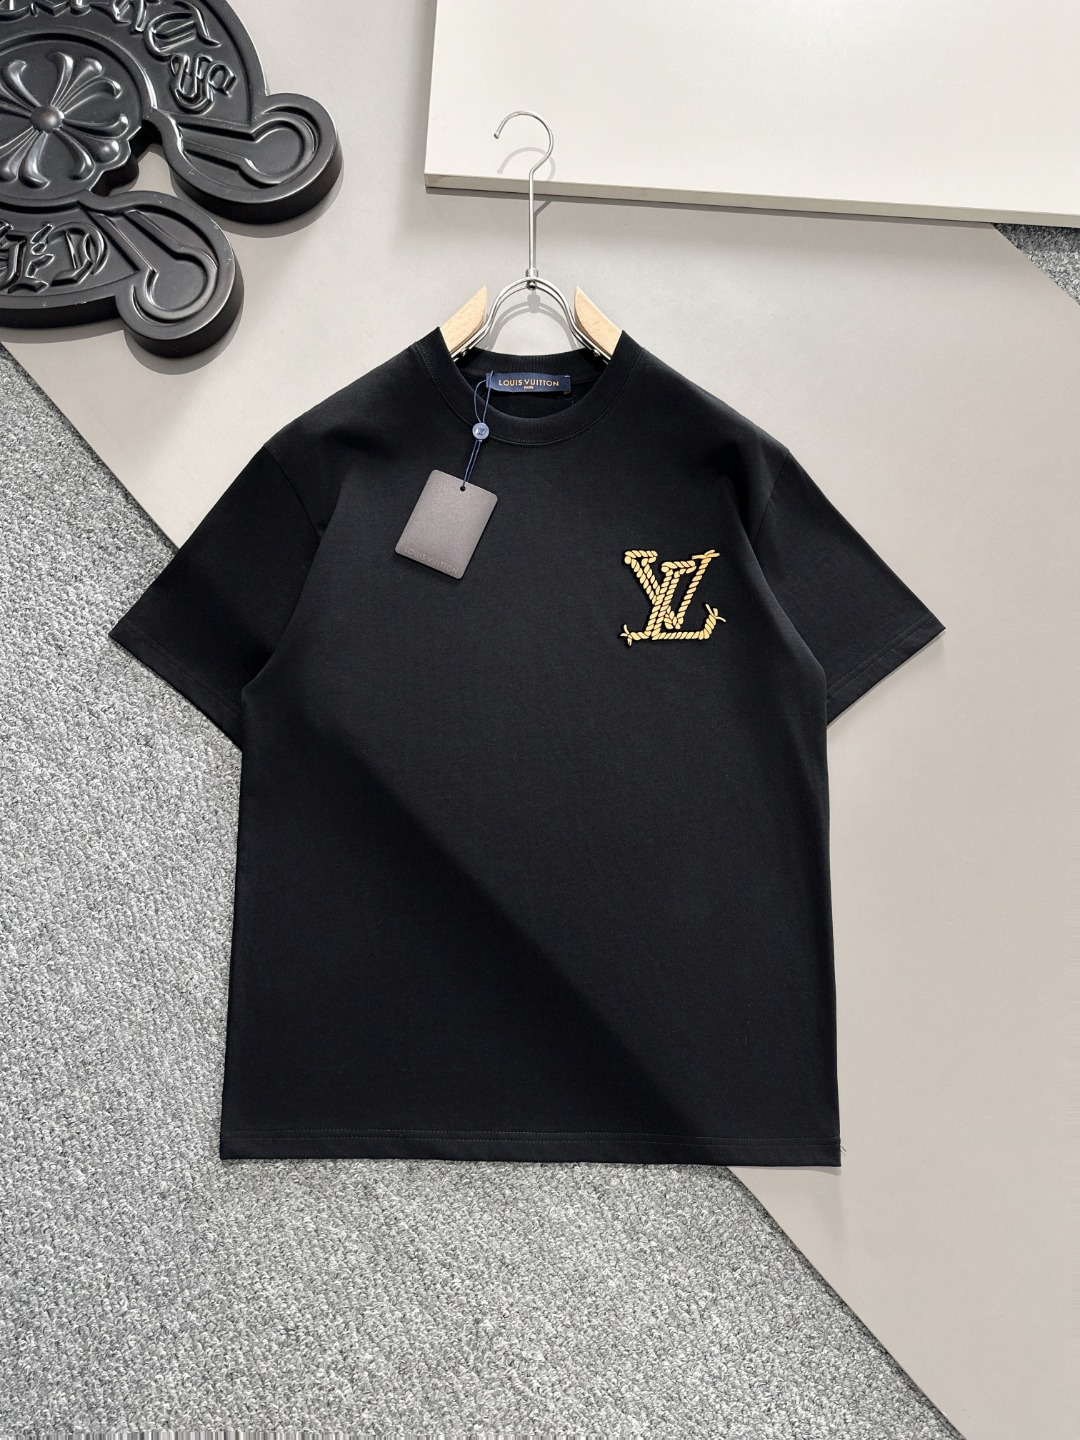 Louis Vuitton Kleding T-Shirt Zwart Wit Katoen Lente/Zomercollectie Fashion Korte mouw